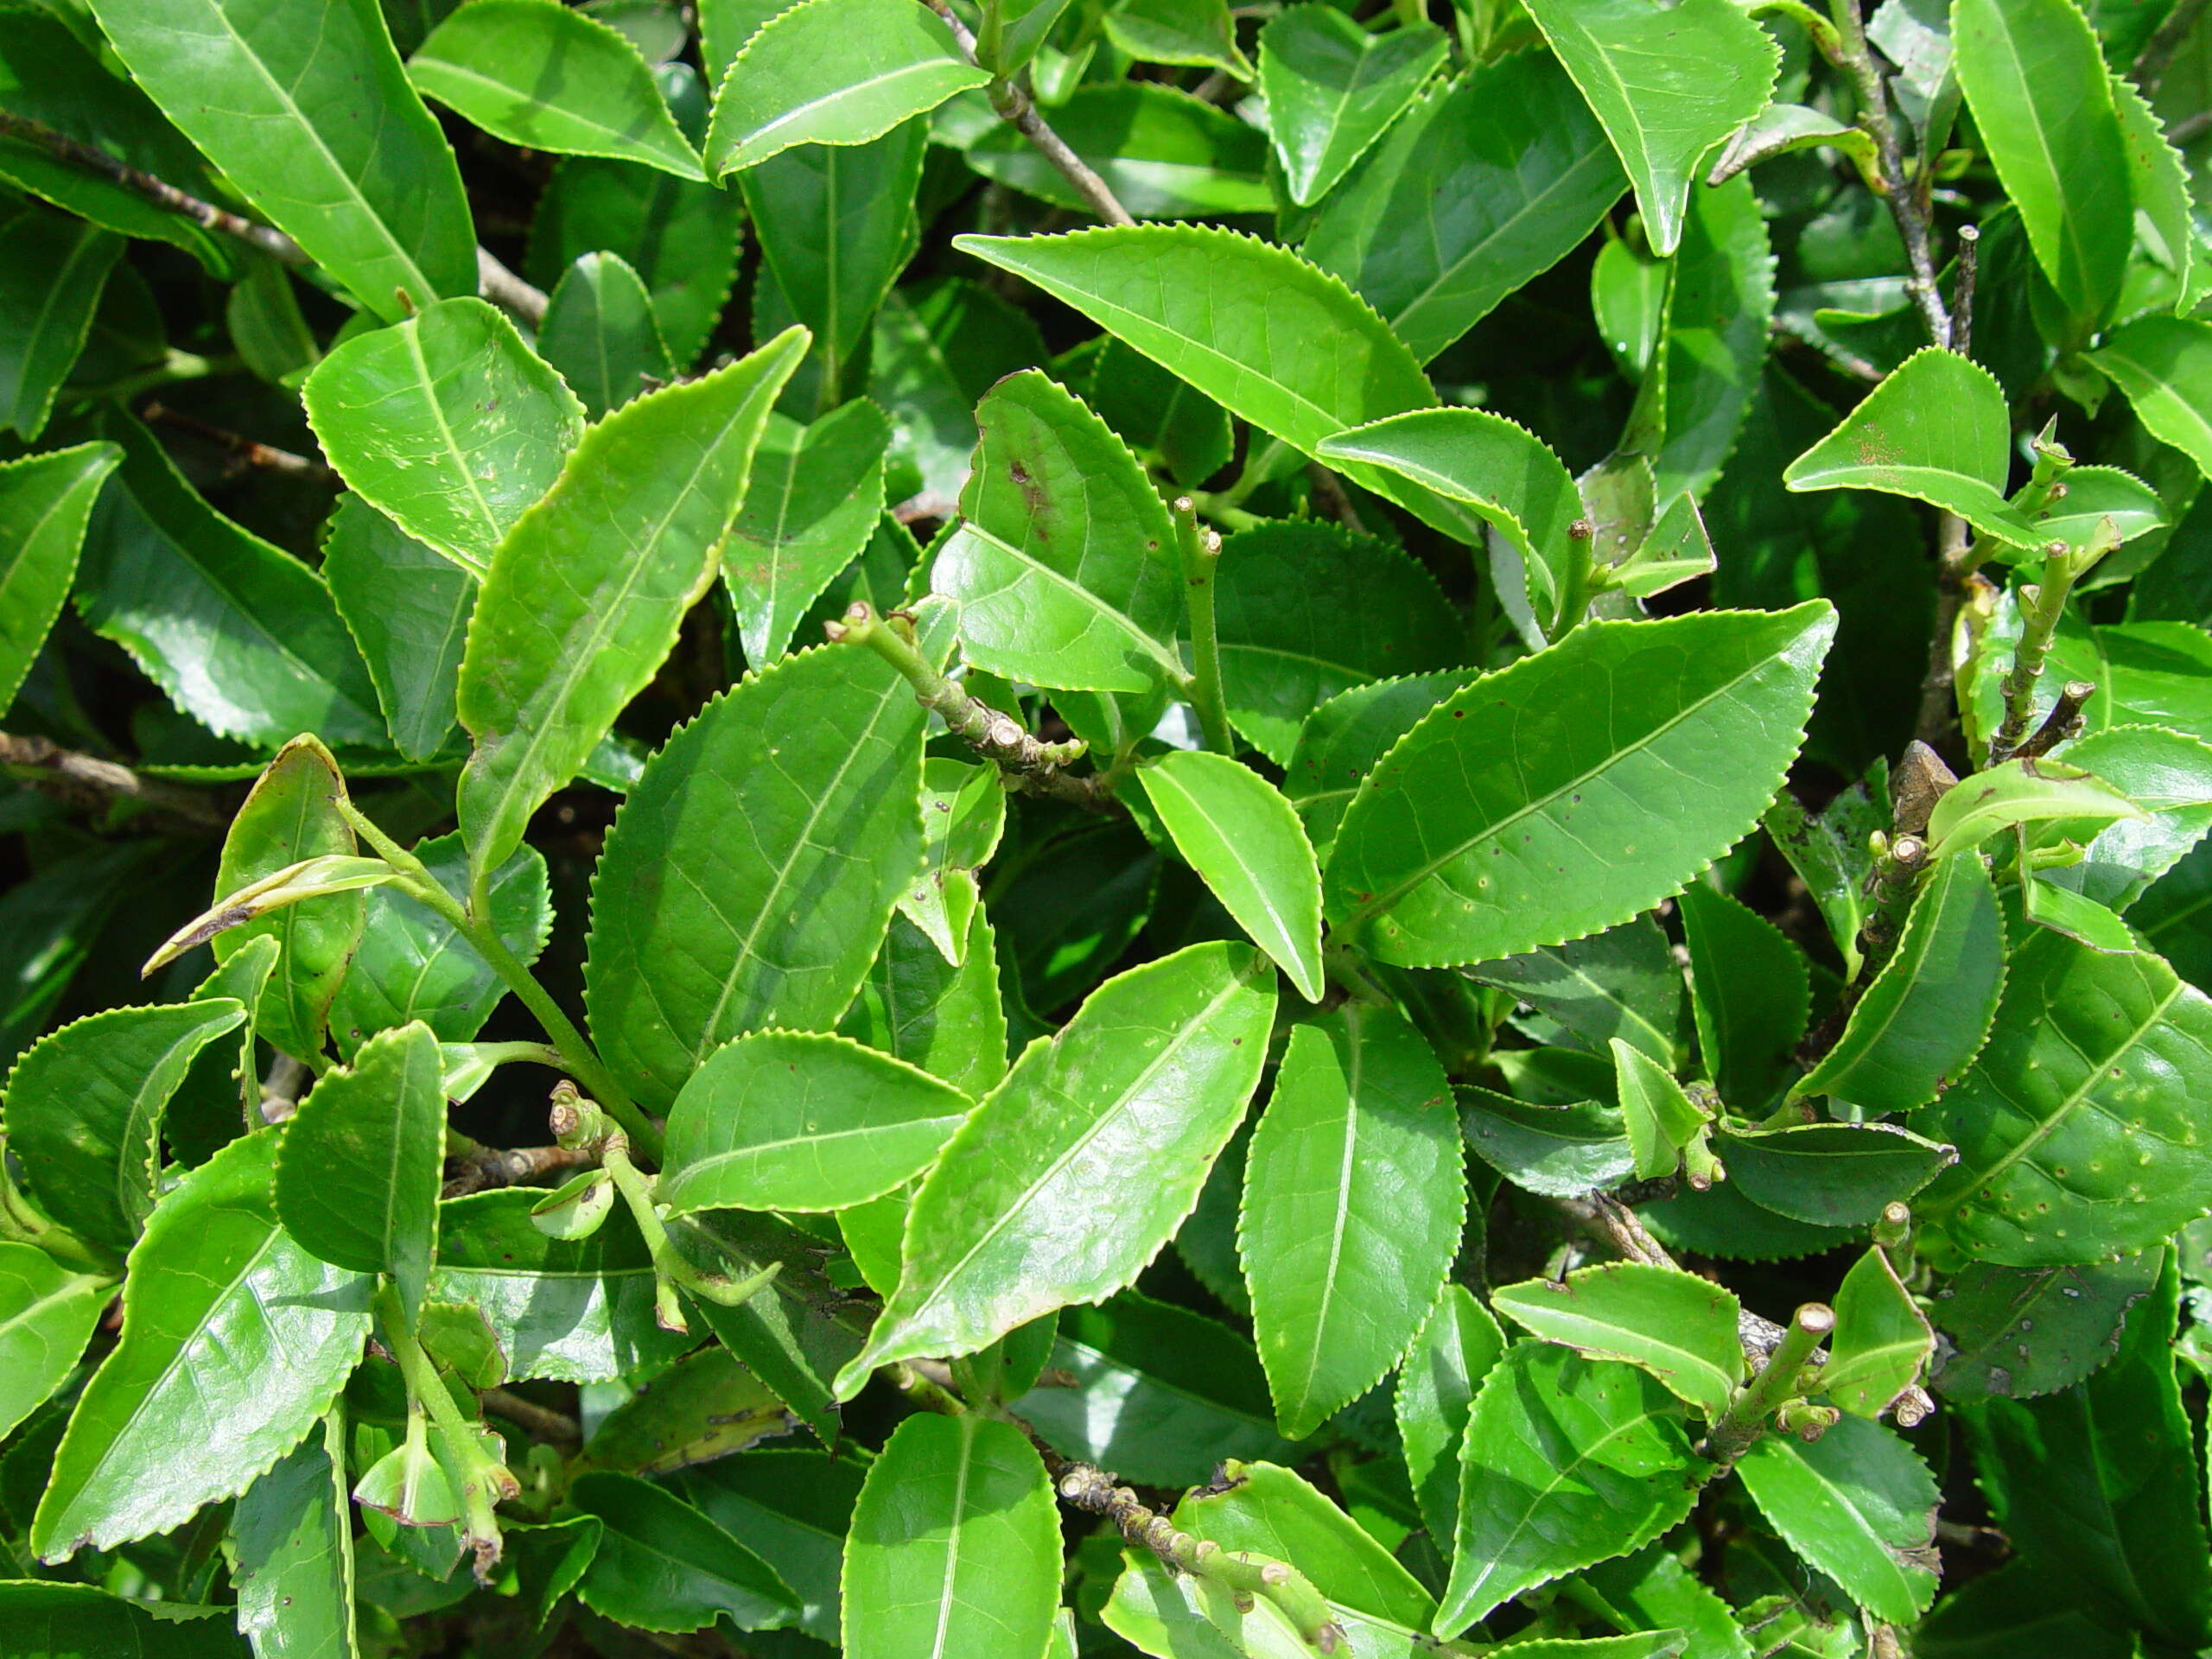 Image of Tea plant